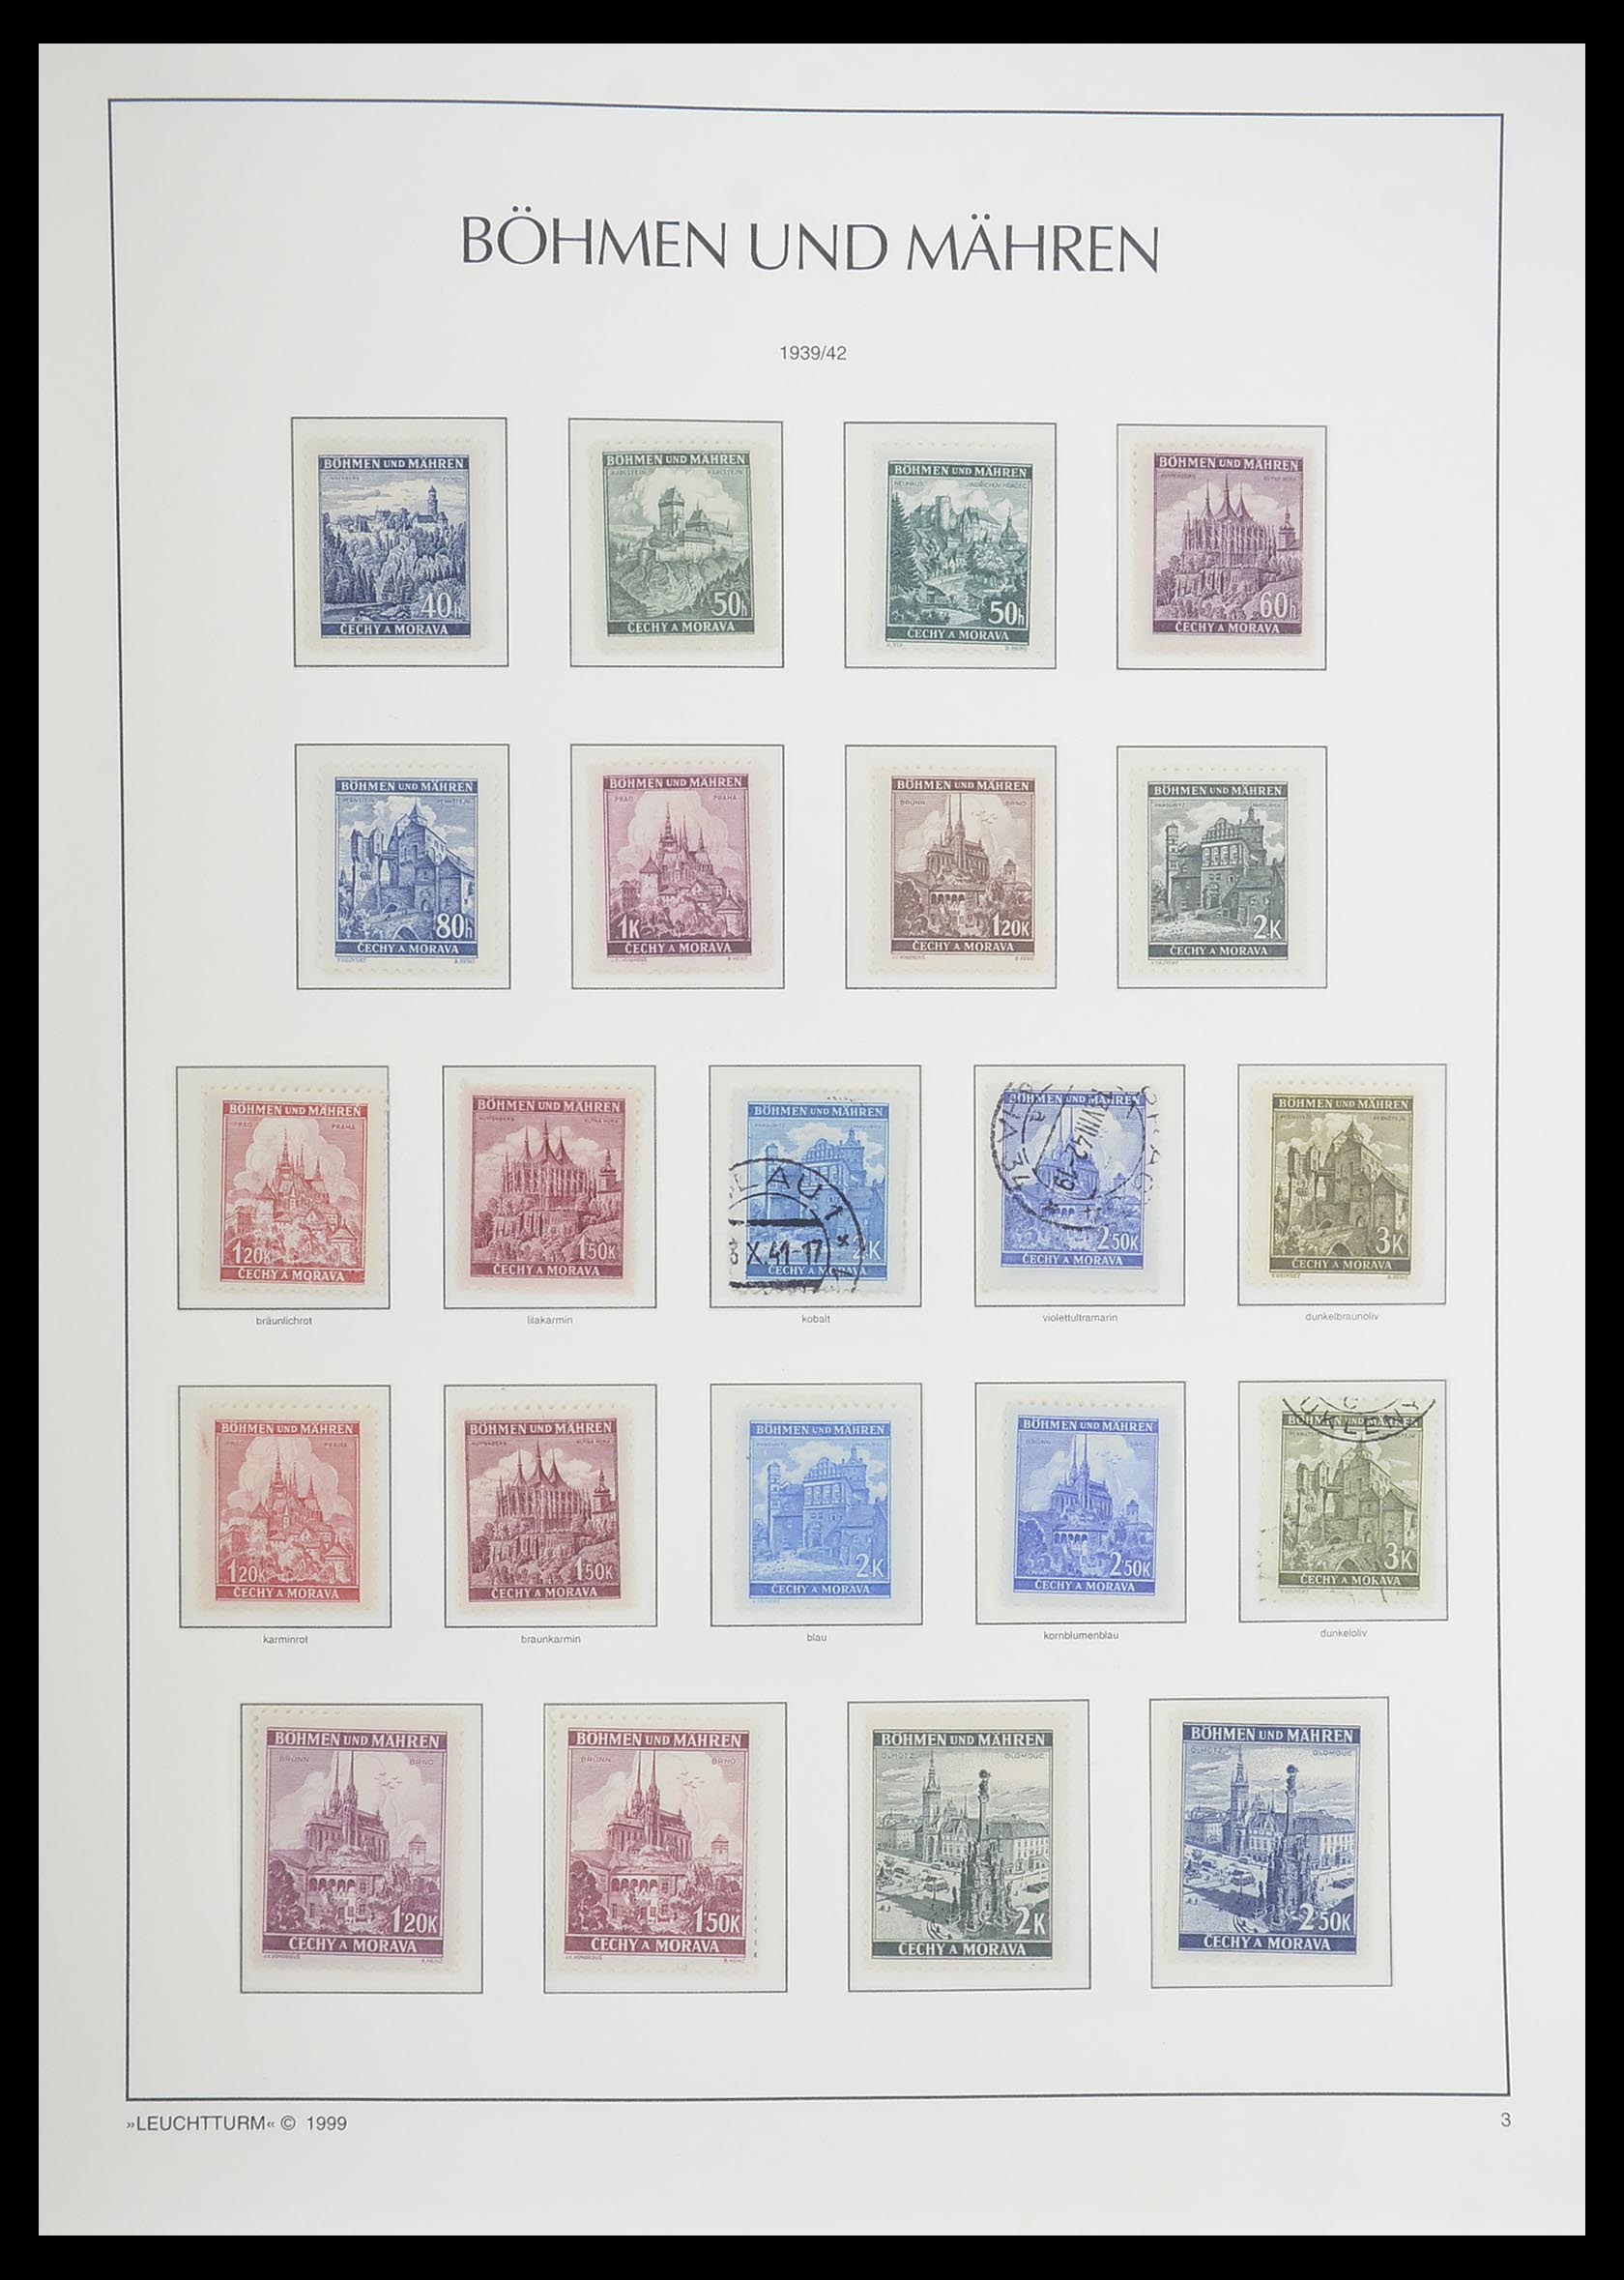 33455 096 - Stamp collection 33455 German Reich 1872-1945.